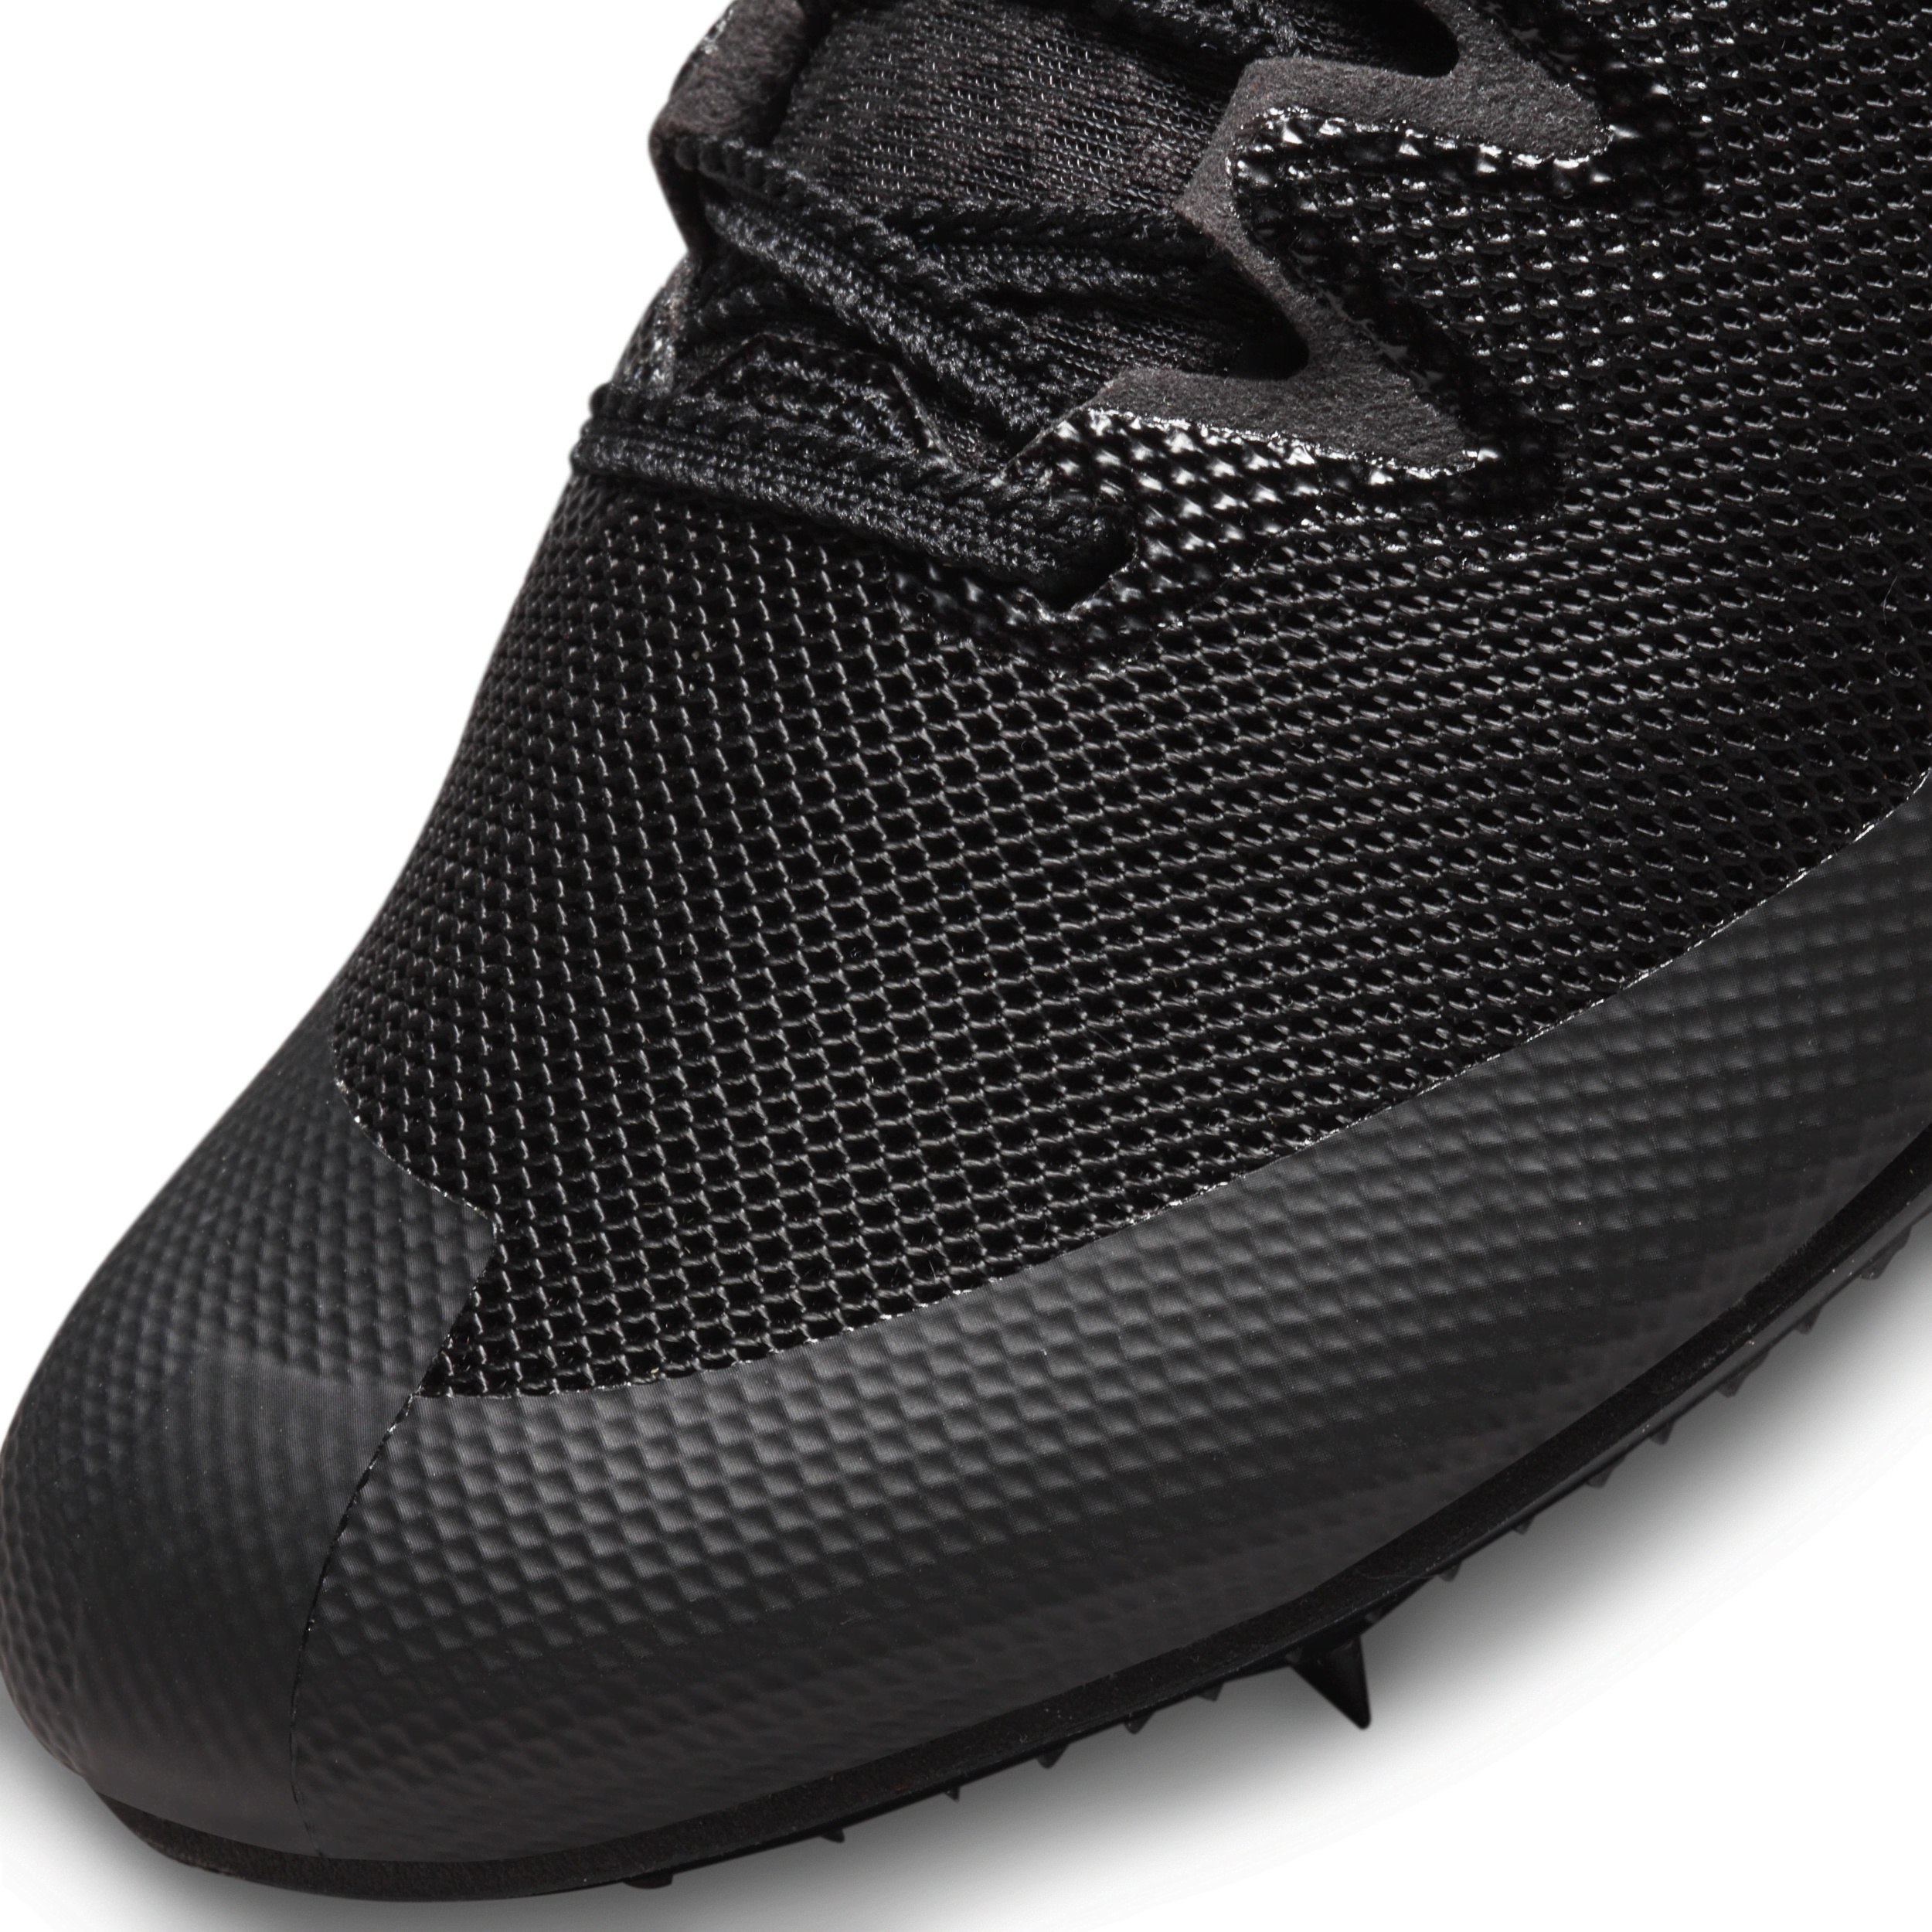 Nike Unisex Rival Multi Track & Field Multi-Event Spikes - 8